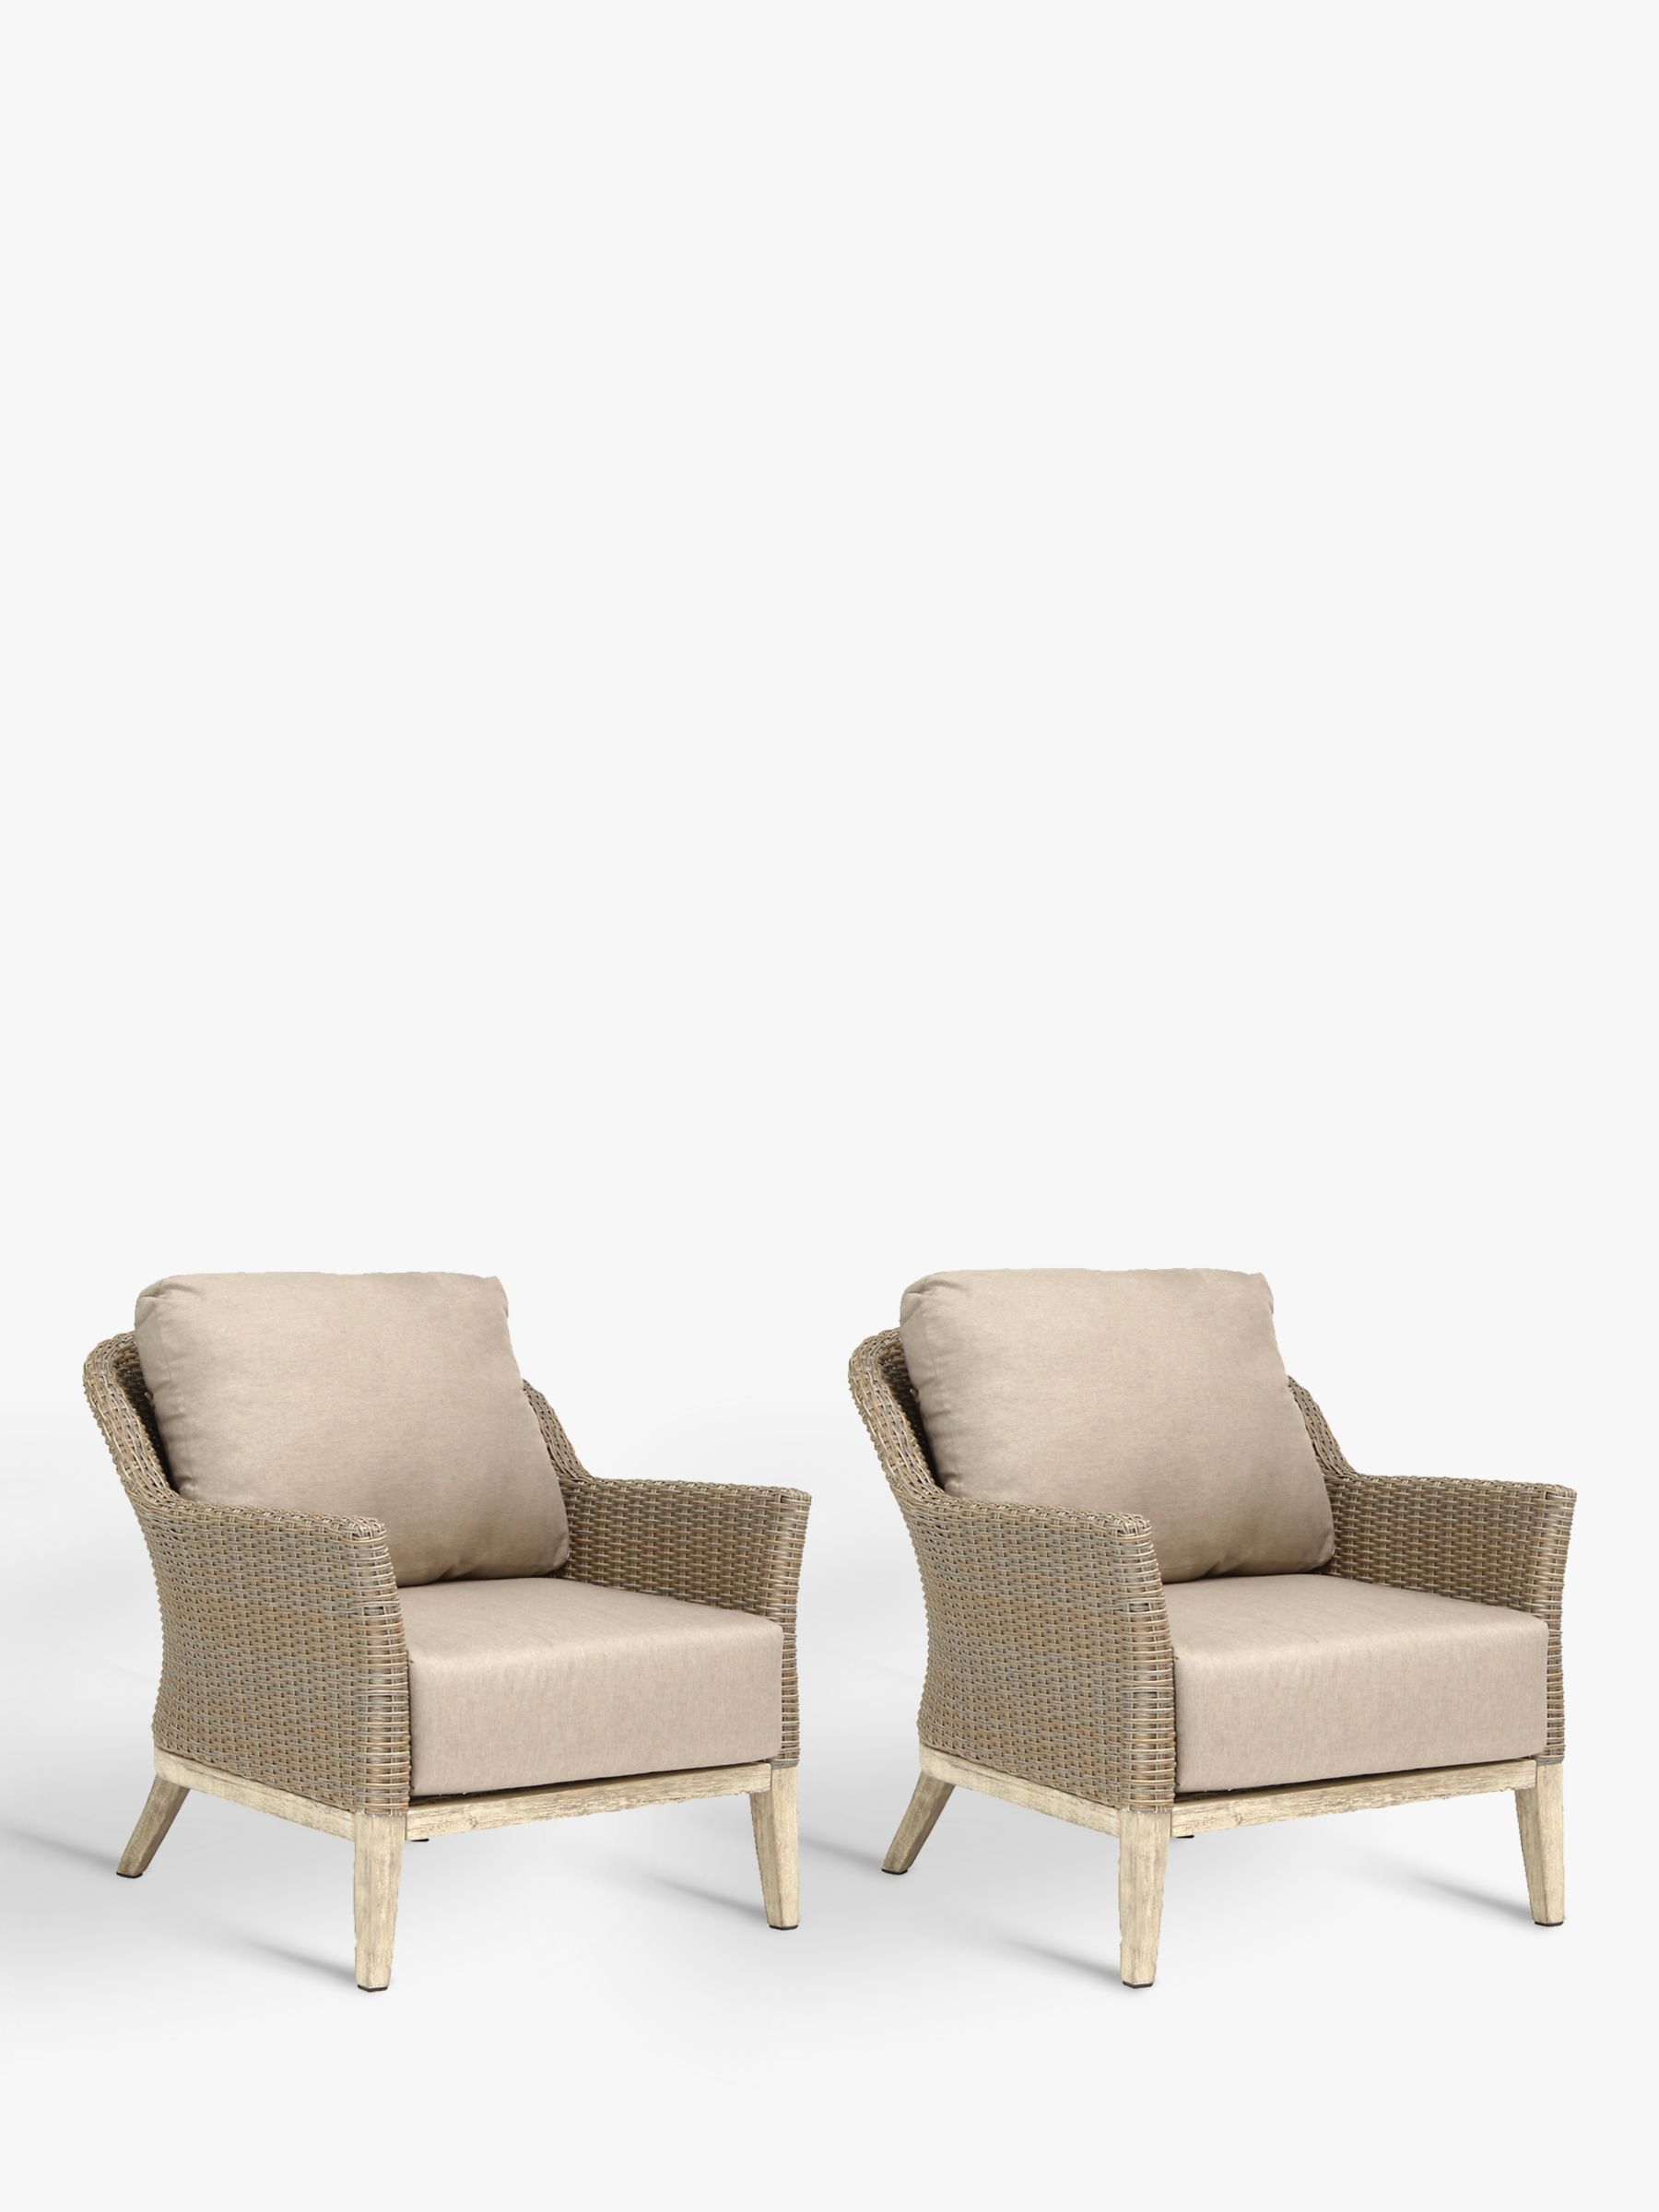 Photo of Kettler cora garden lounging armchairs set of 2 fsc-certified -acacia wood- smoke white